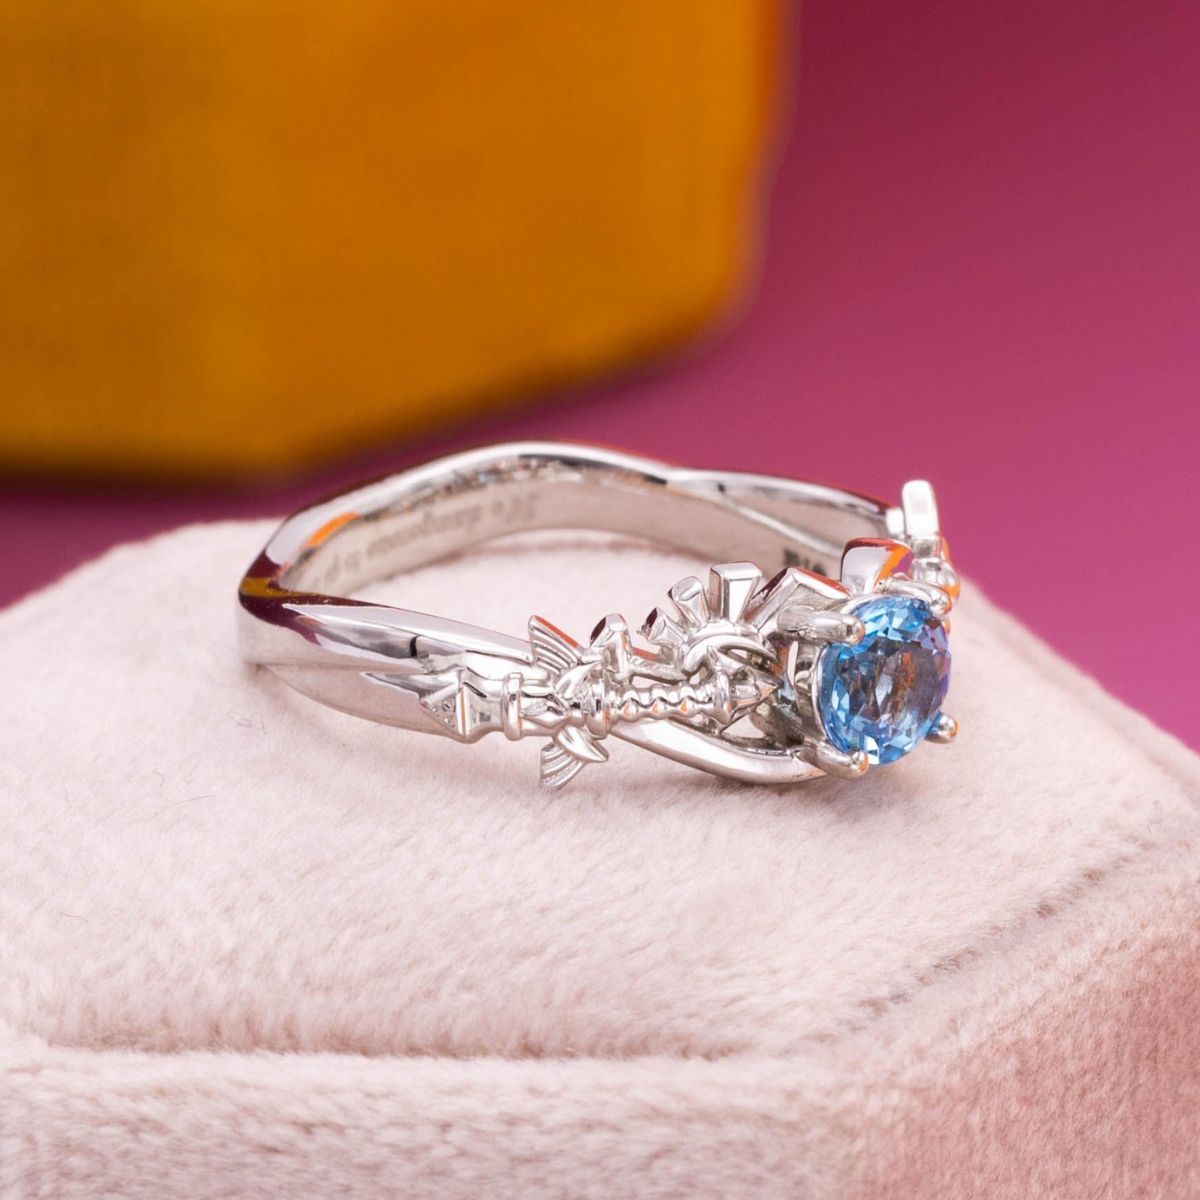 Zelda inspired engagement ring designs | CustomMade.com